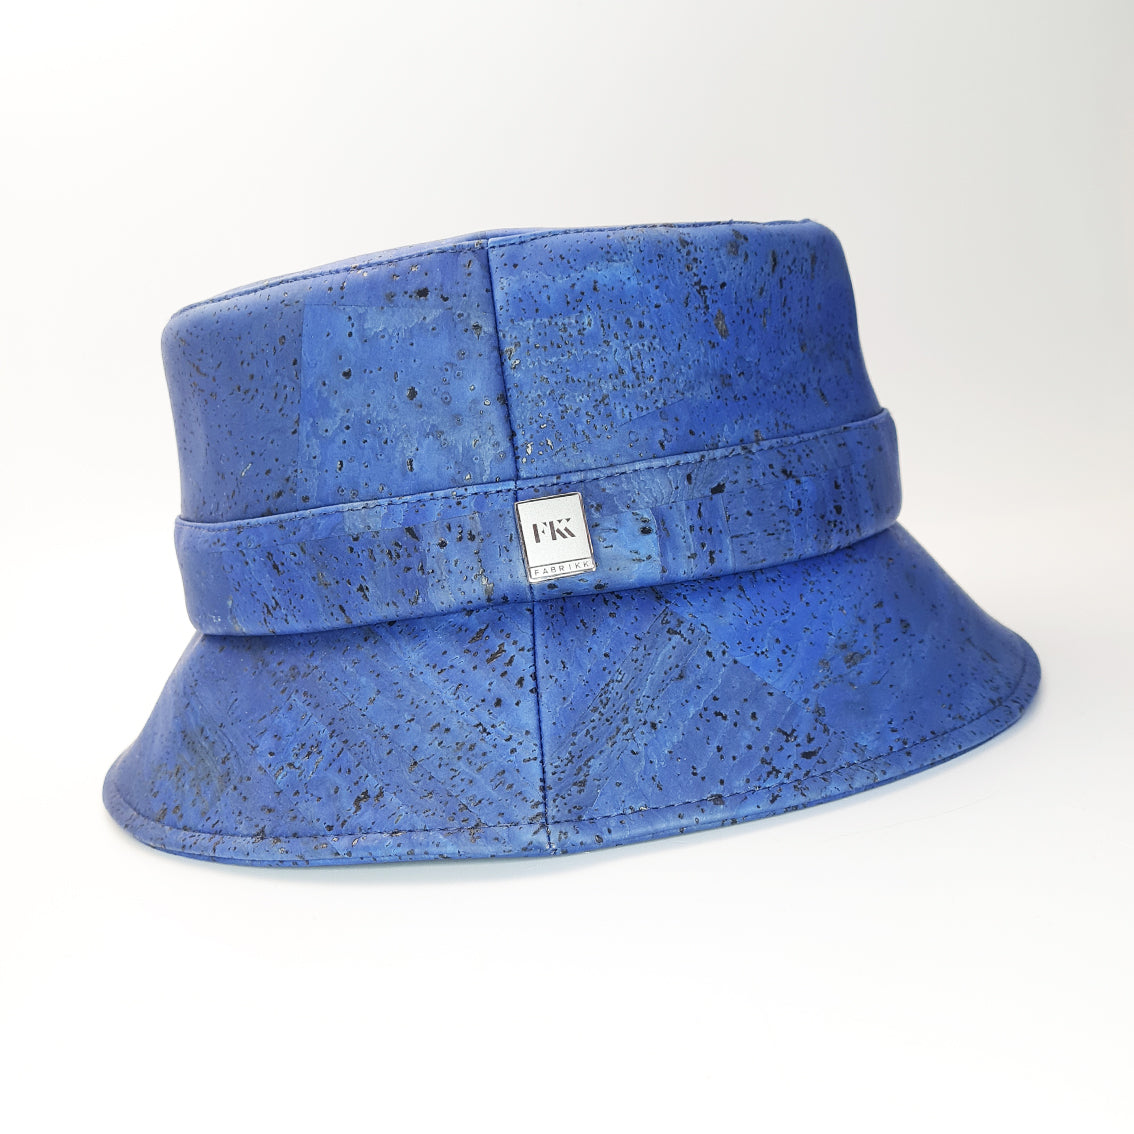 FABRIKK Montecristo Eco Cork Bucket Hat | Electric Blue | Vegan Hat